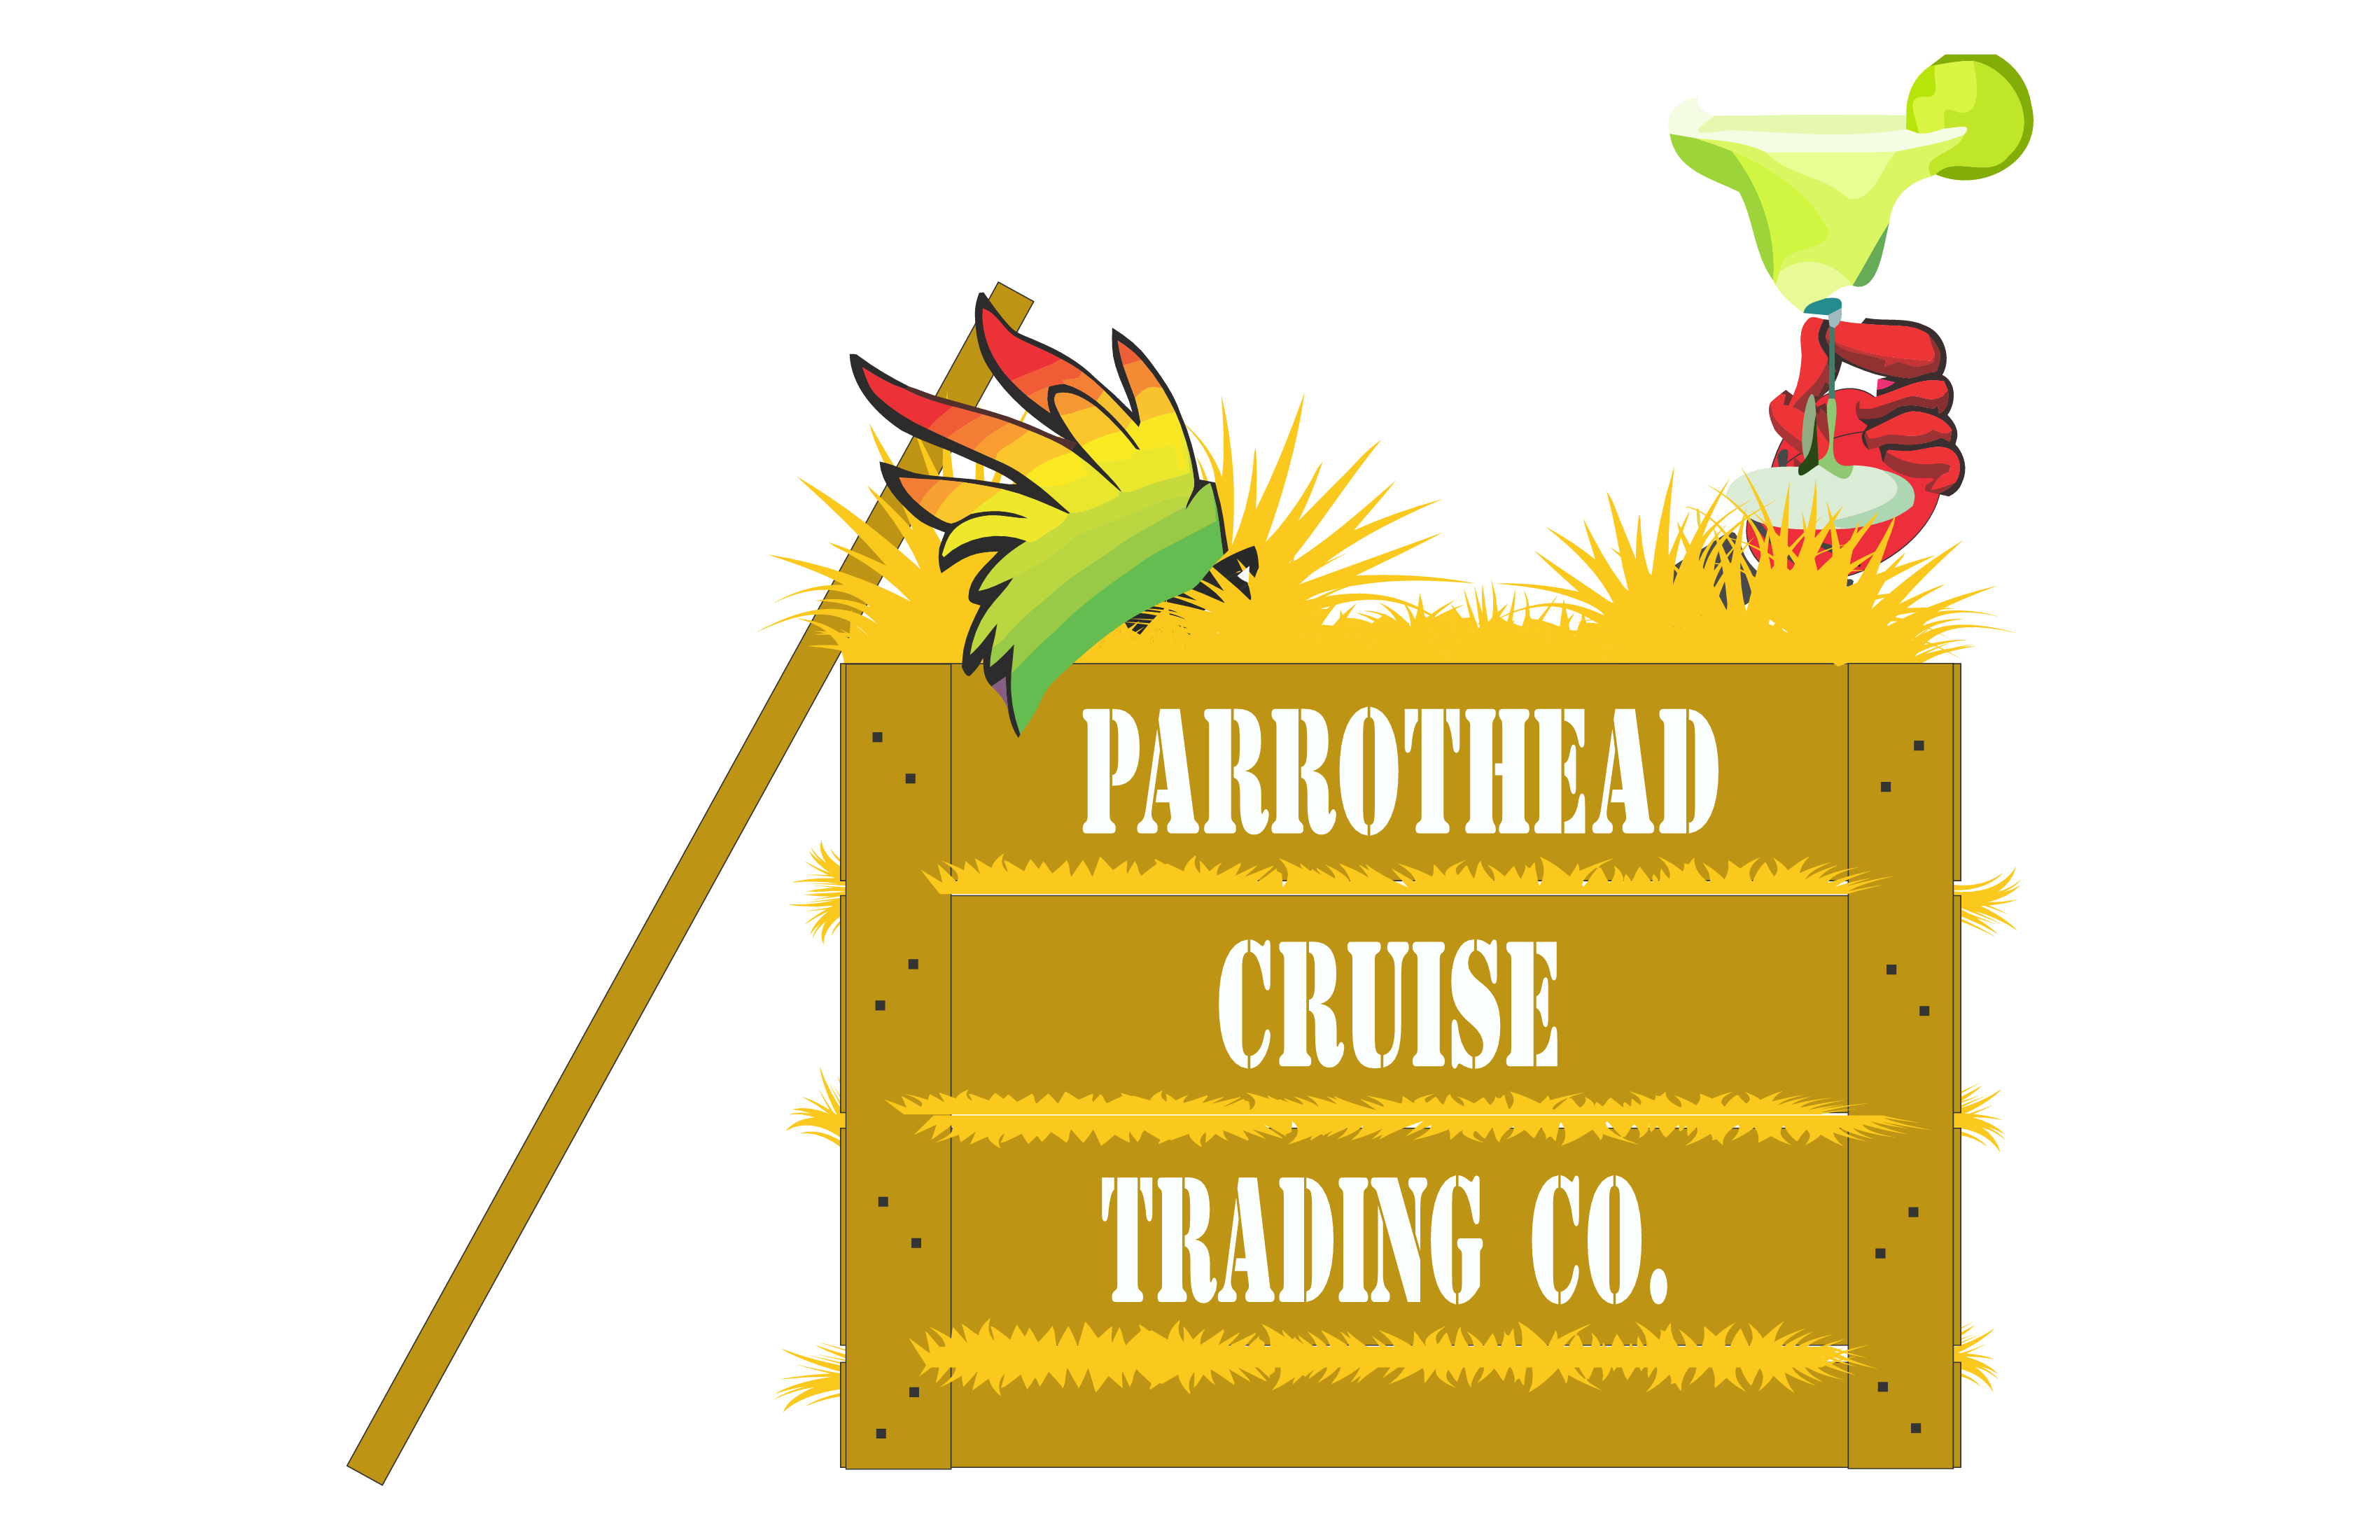 parrothead cruise 2023